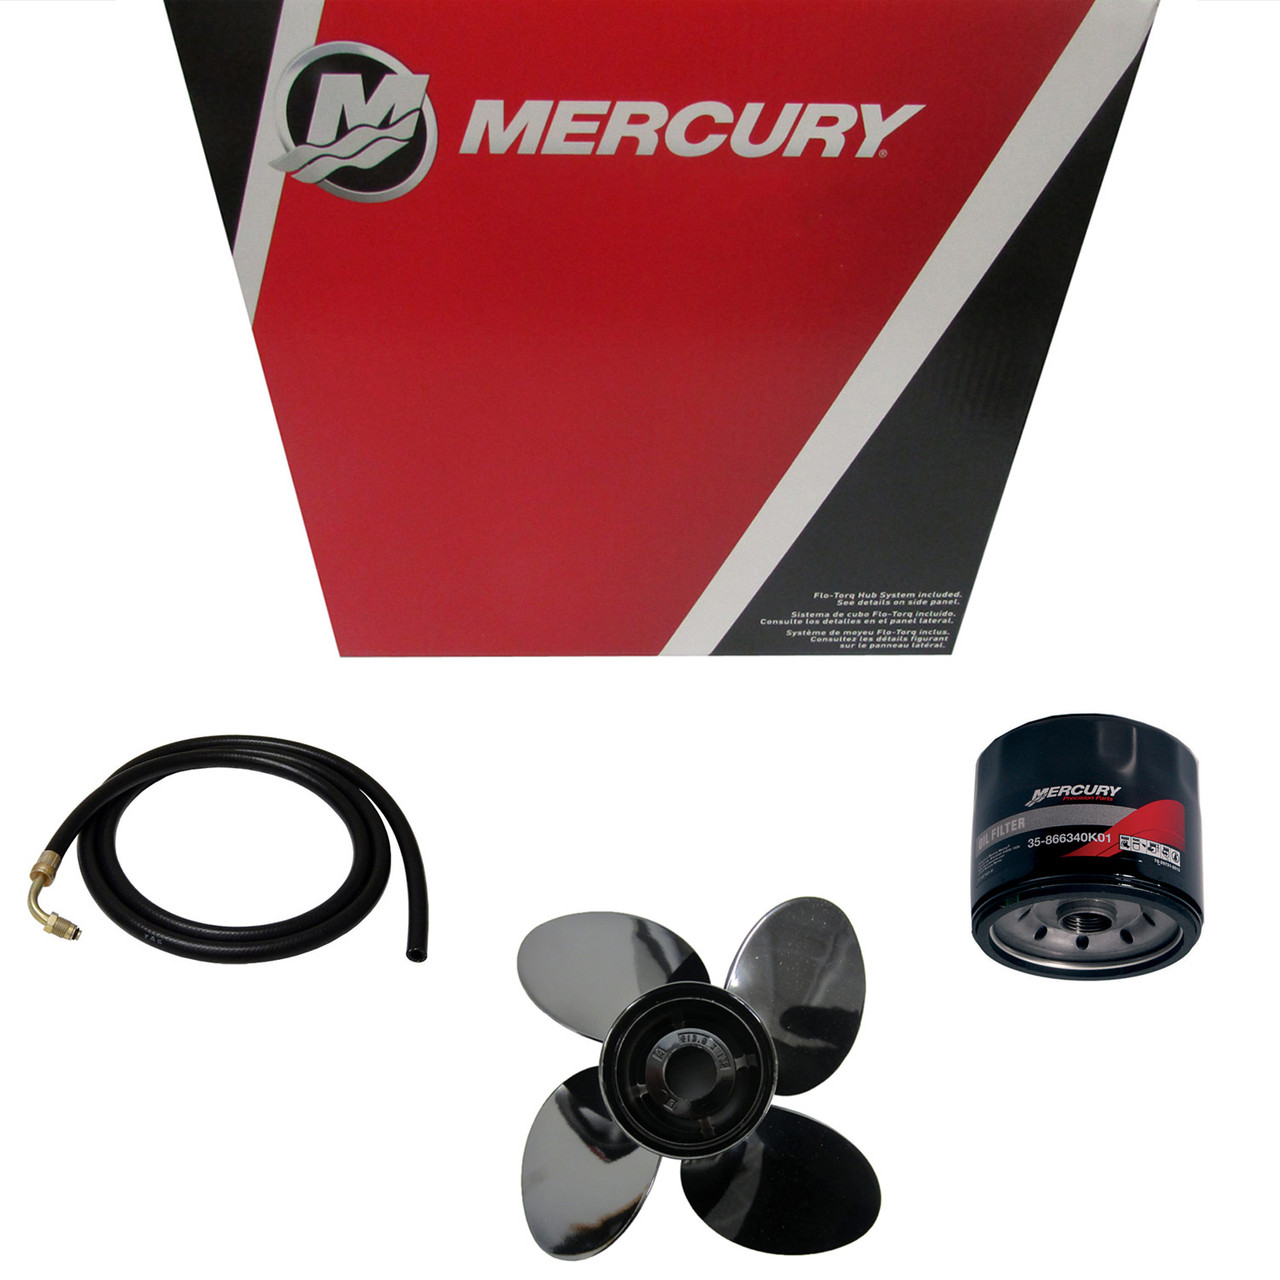 Mercury Marine / Mercruiser New OEM Decal Set, 37-881649A06